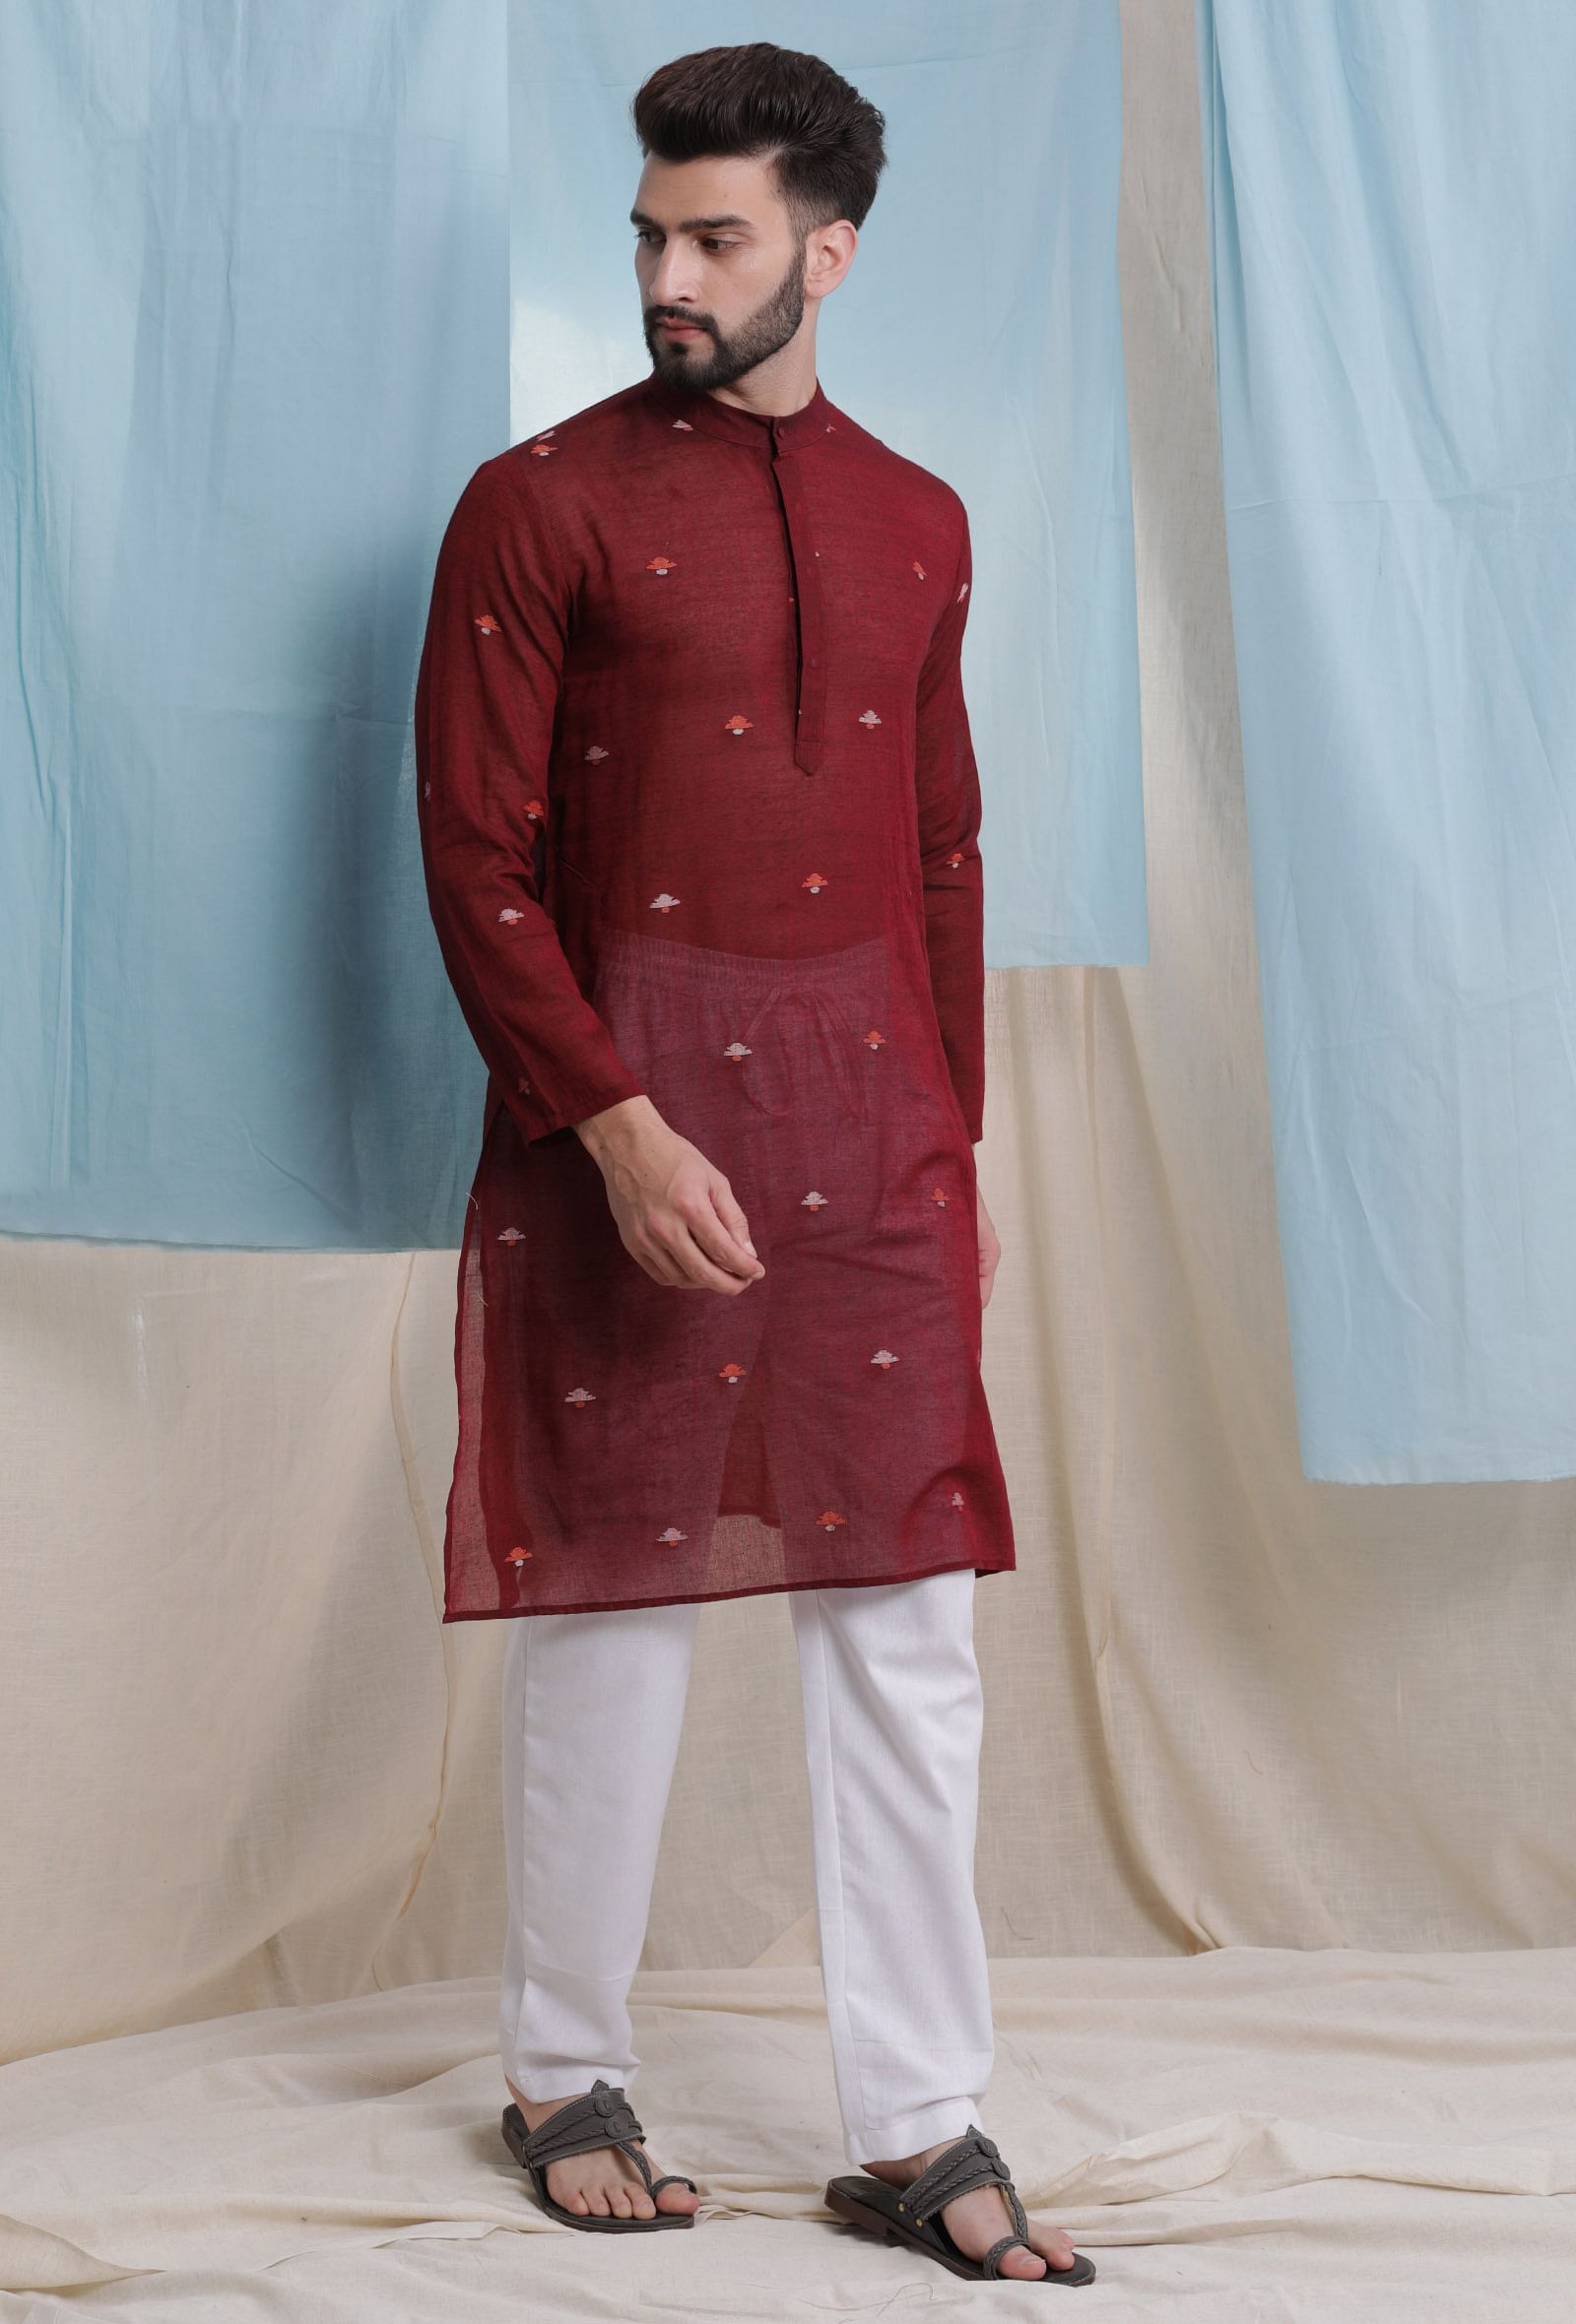 Wine red color cotton jamdani full sleeves short kurta